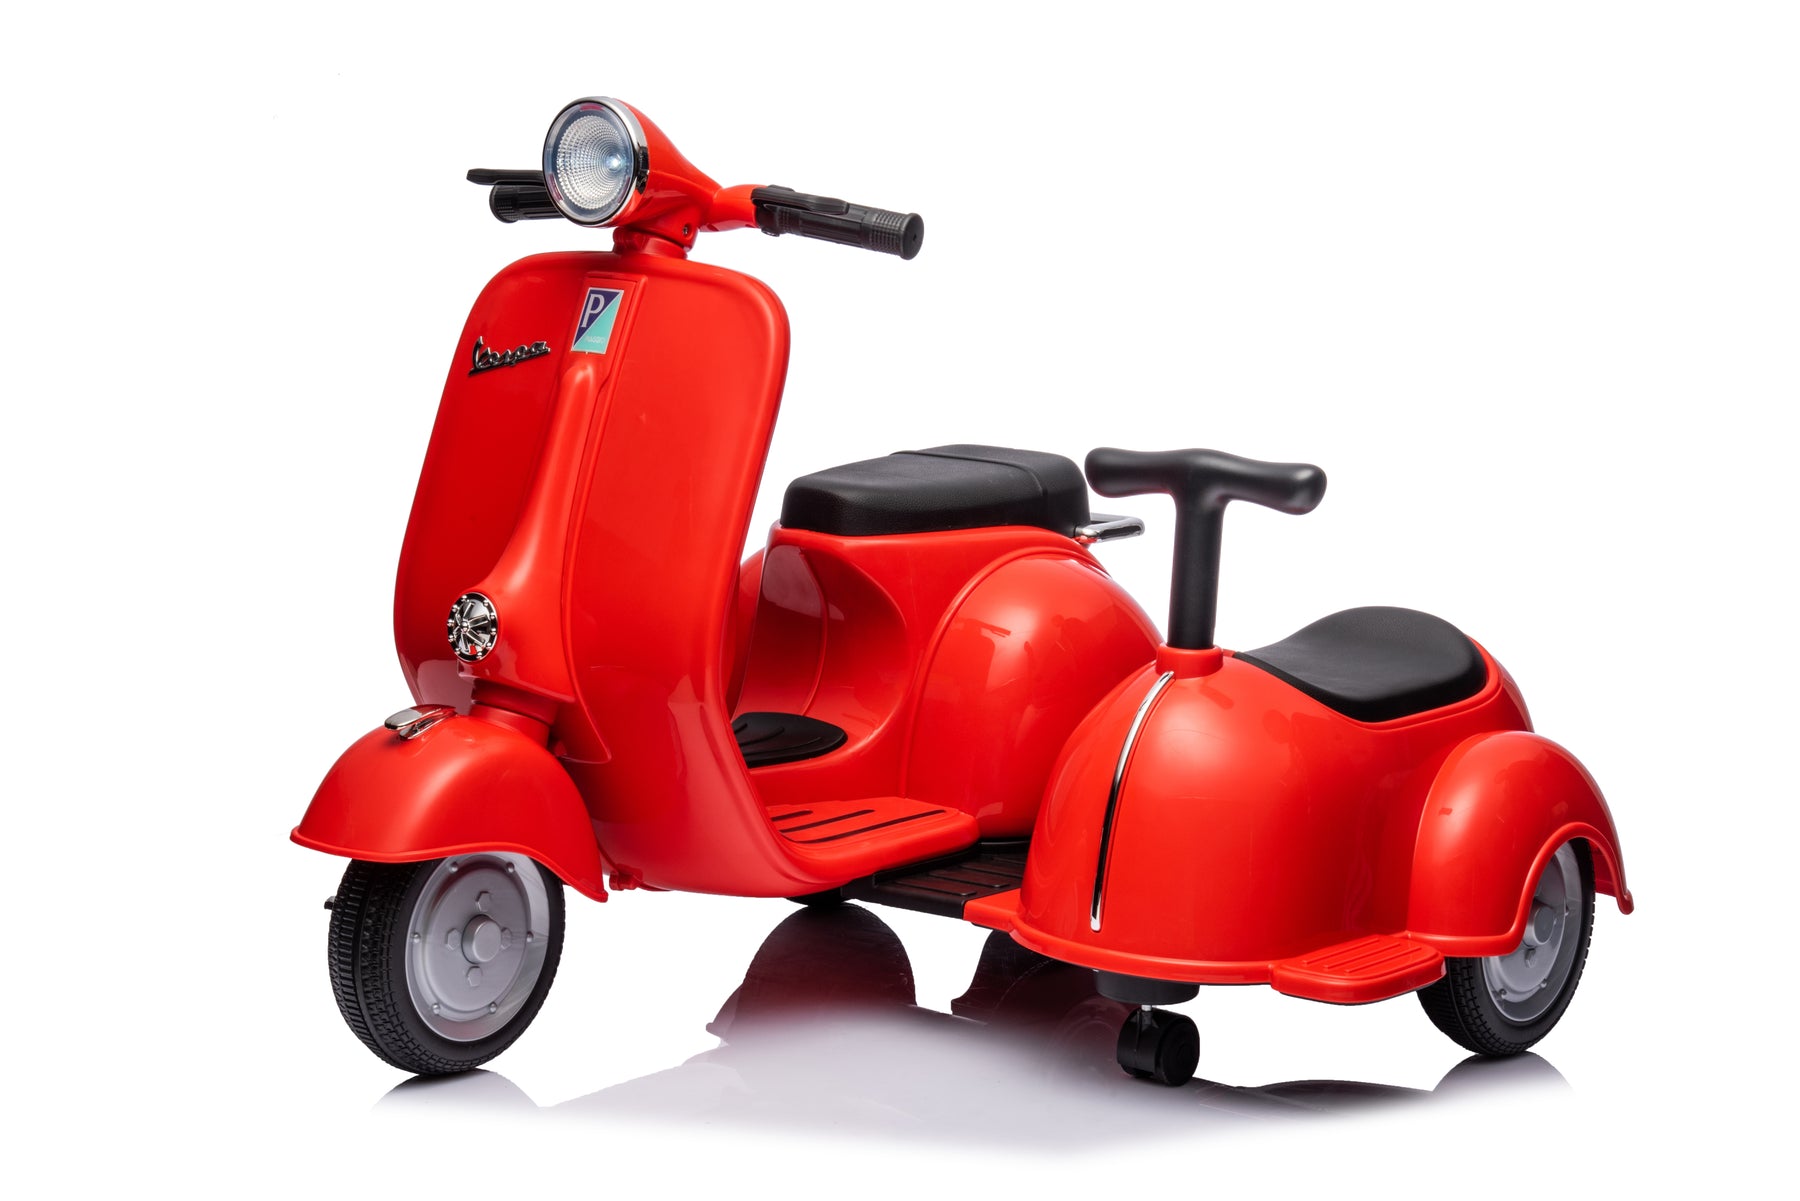 6V LICENSED Vespa Scooter Motorcycle with Side Car for kids, Red - Tonkn